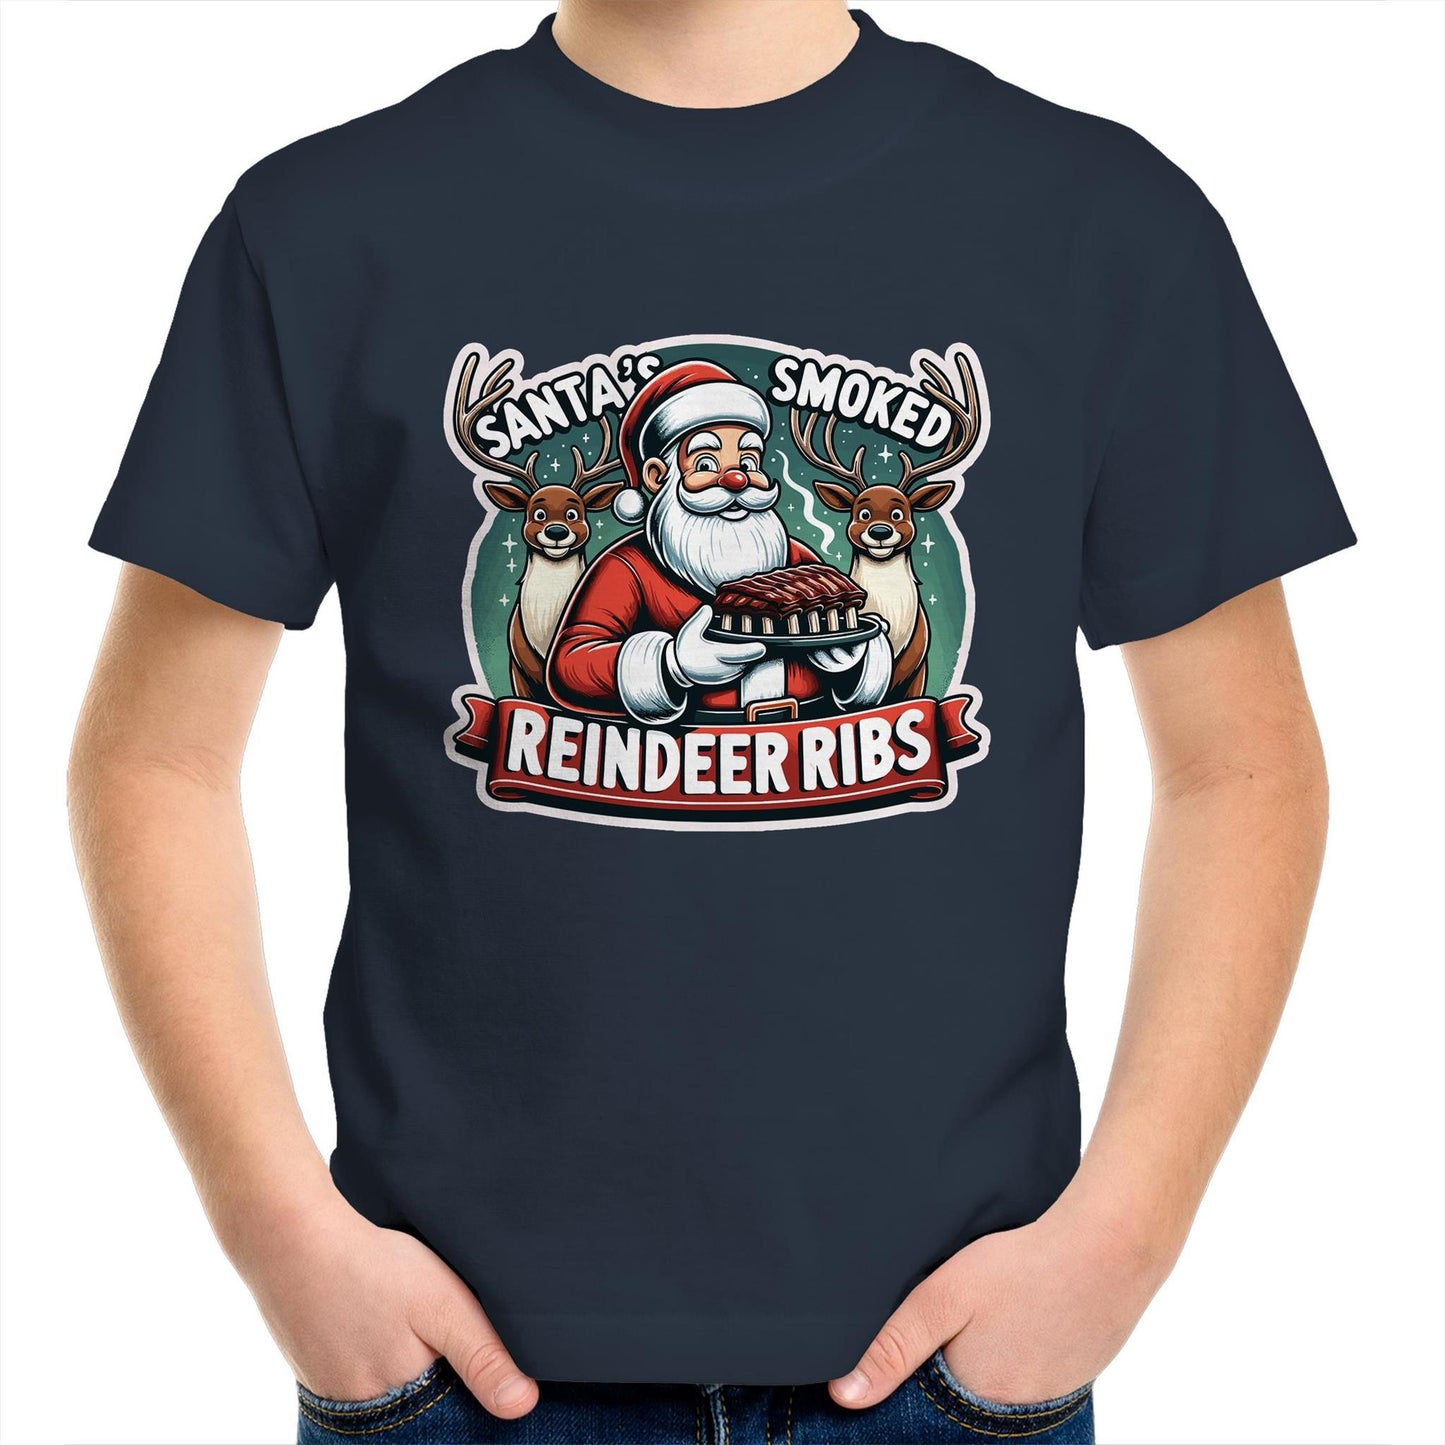 Santas Smoked Reindeer Ribs - AS Colour Kids Youth T-Shirt